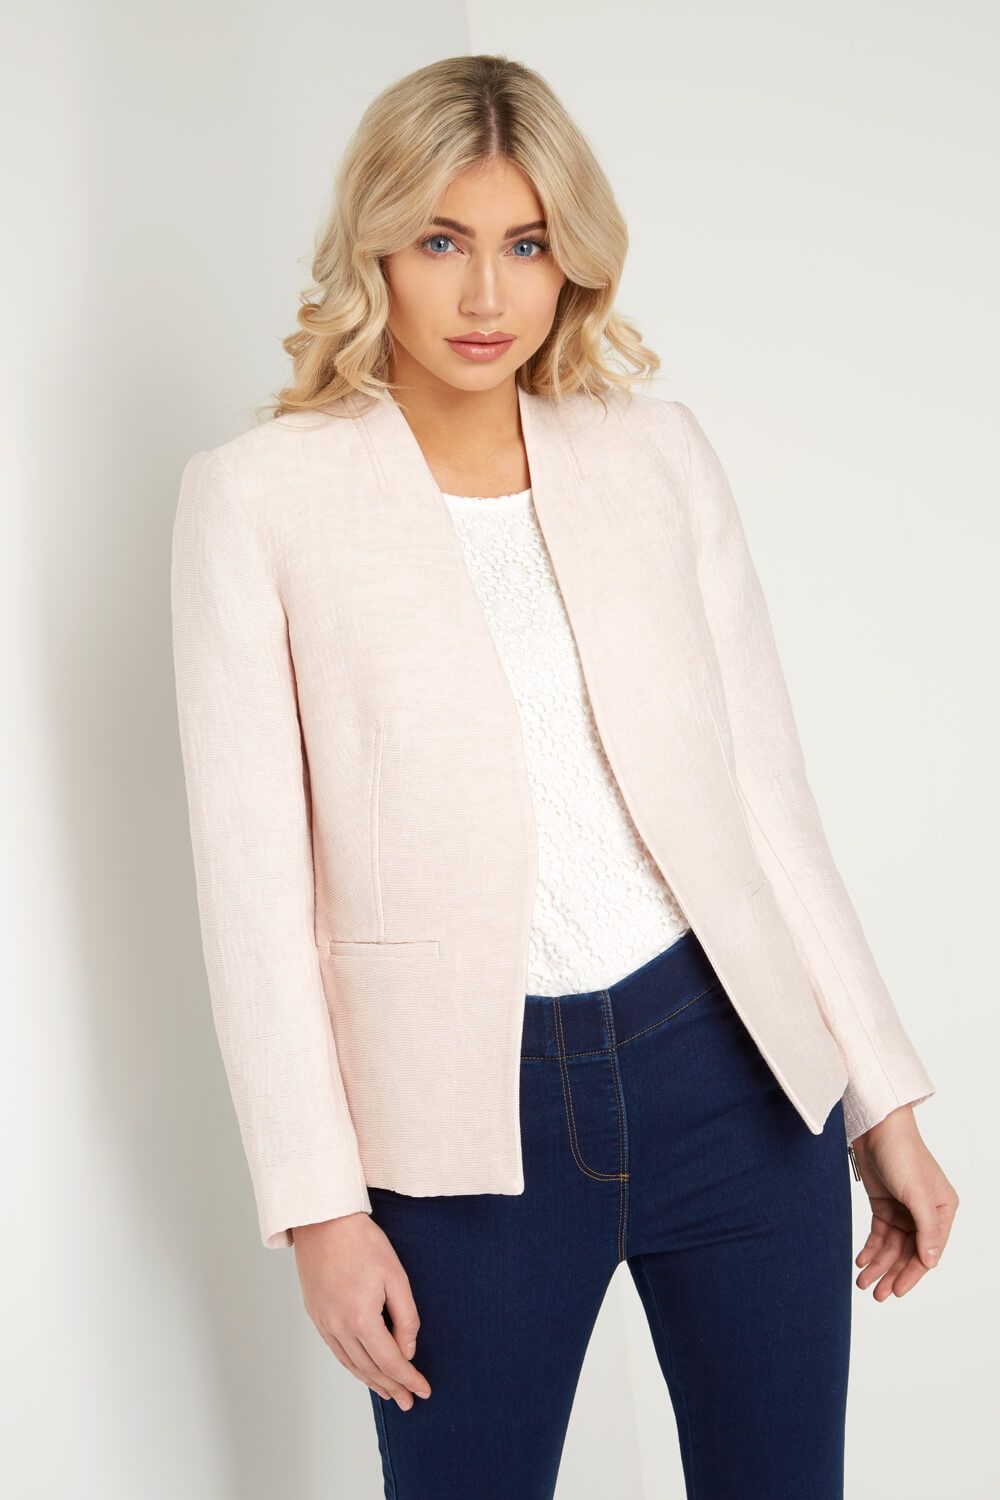 Pleat Tailored Jacket in Light Pink - Roman Originals UK